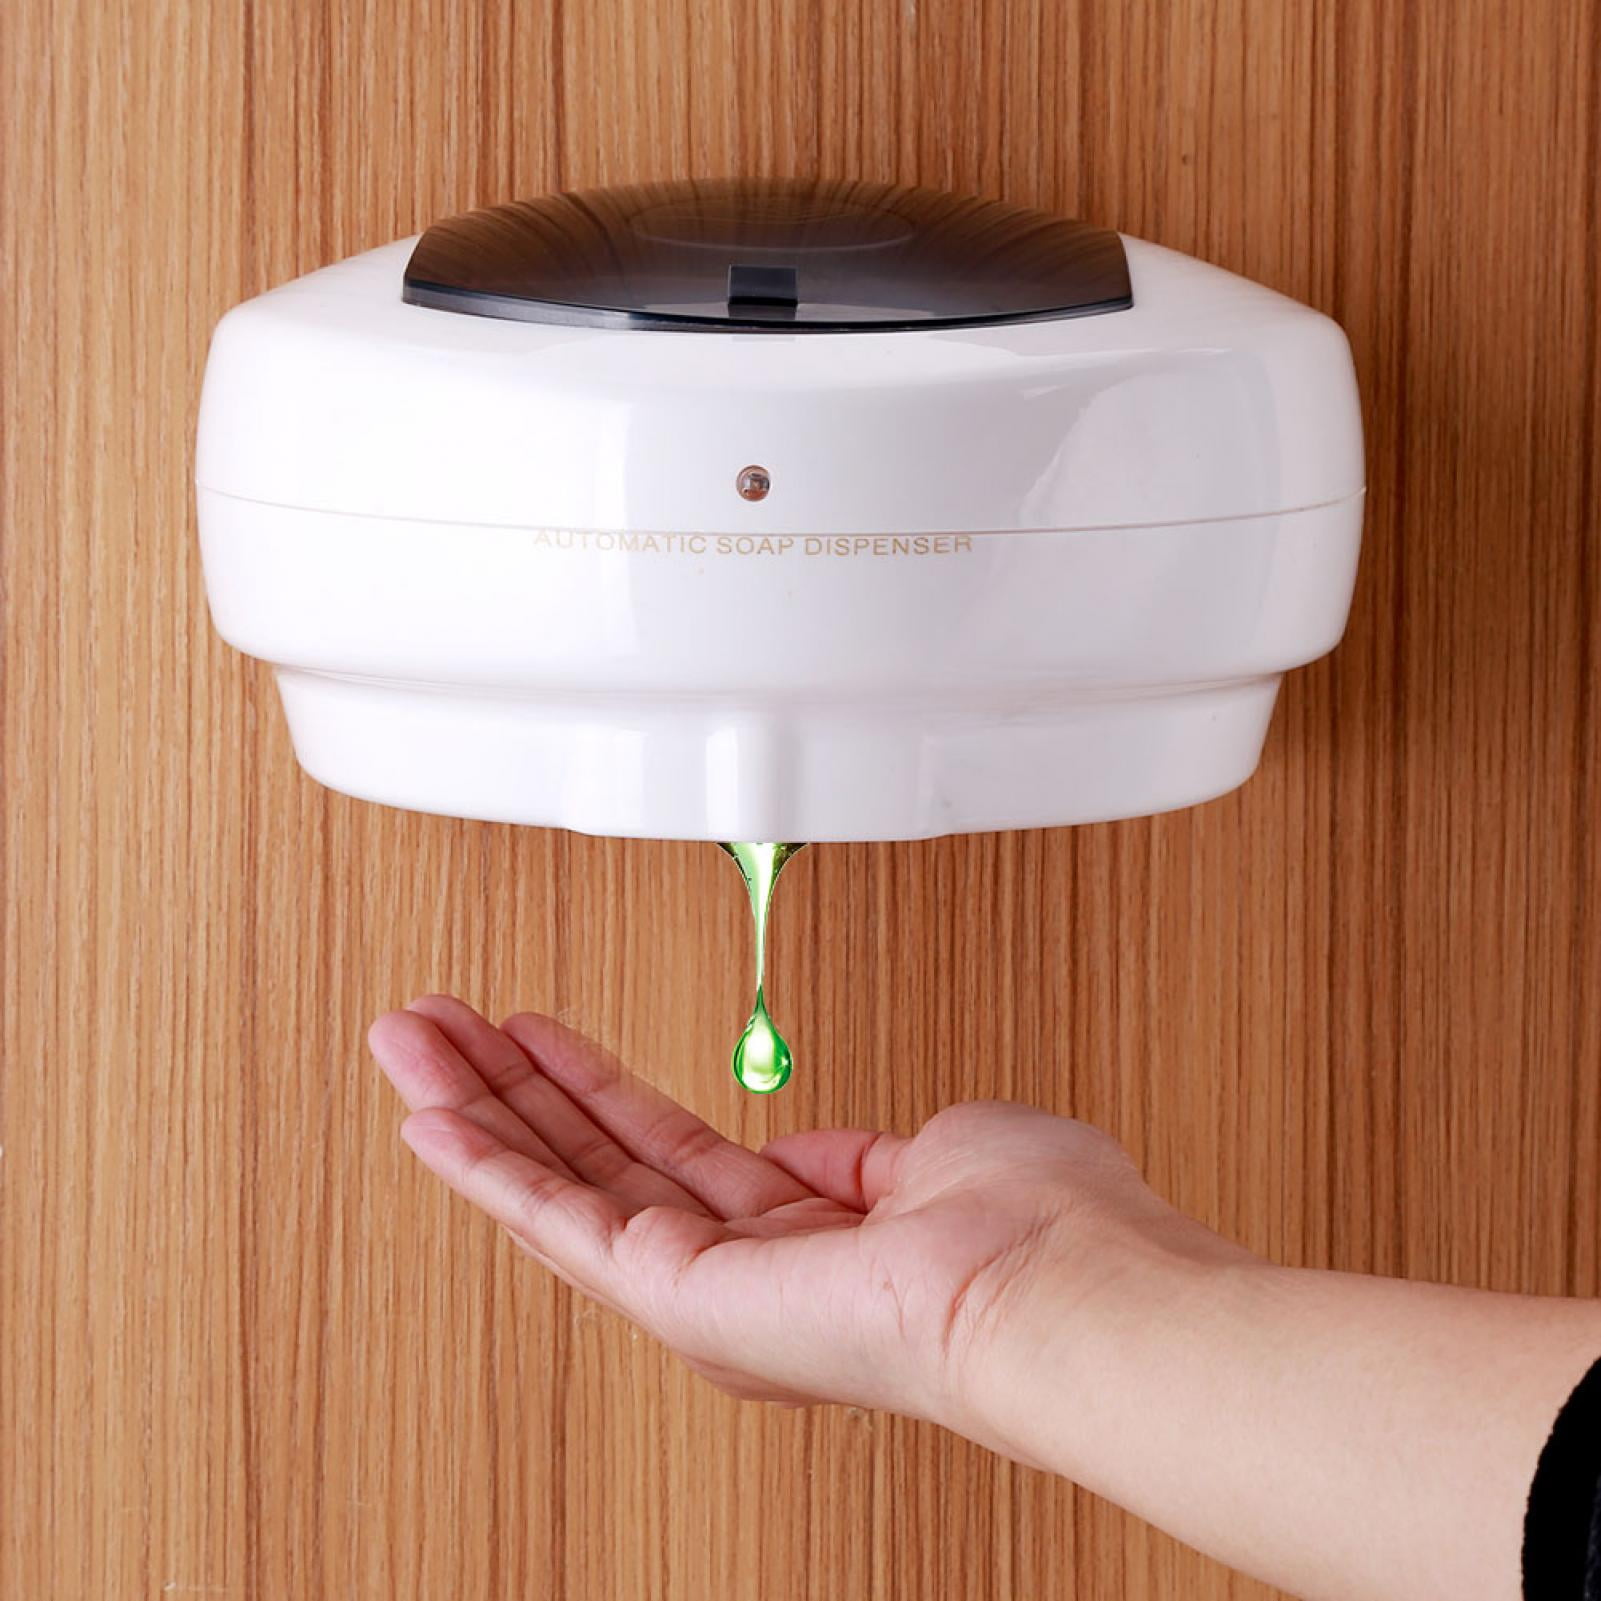 Details about   Automatic Sensor Hand Free Soap Dispenser Shampoo Bathroom Wall Mounted